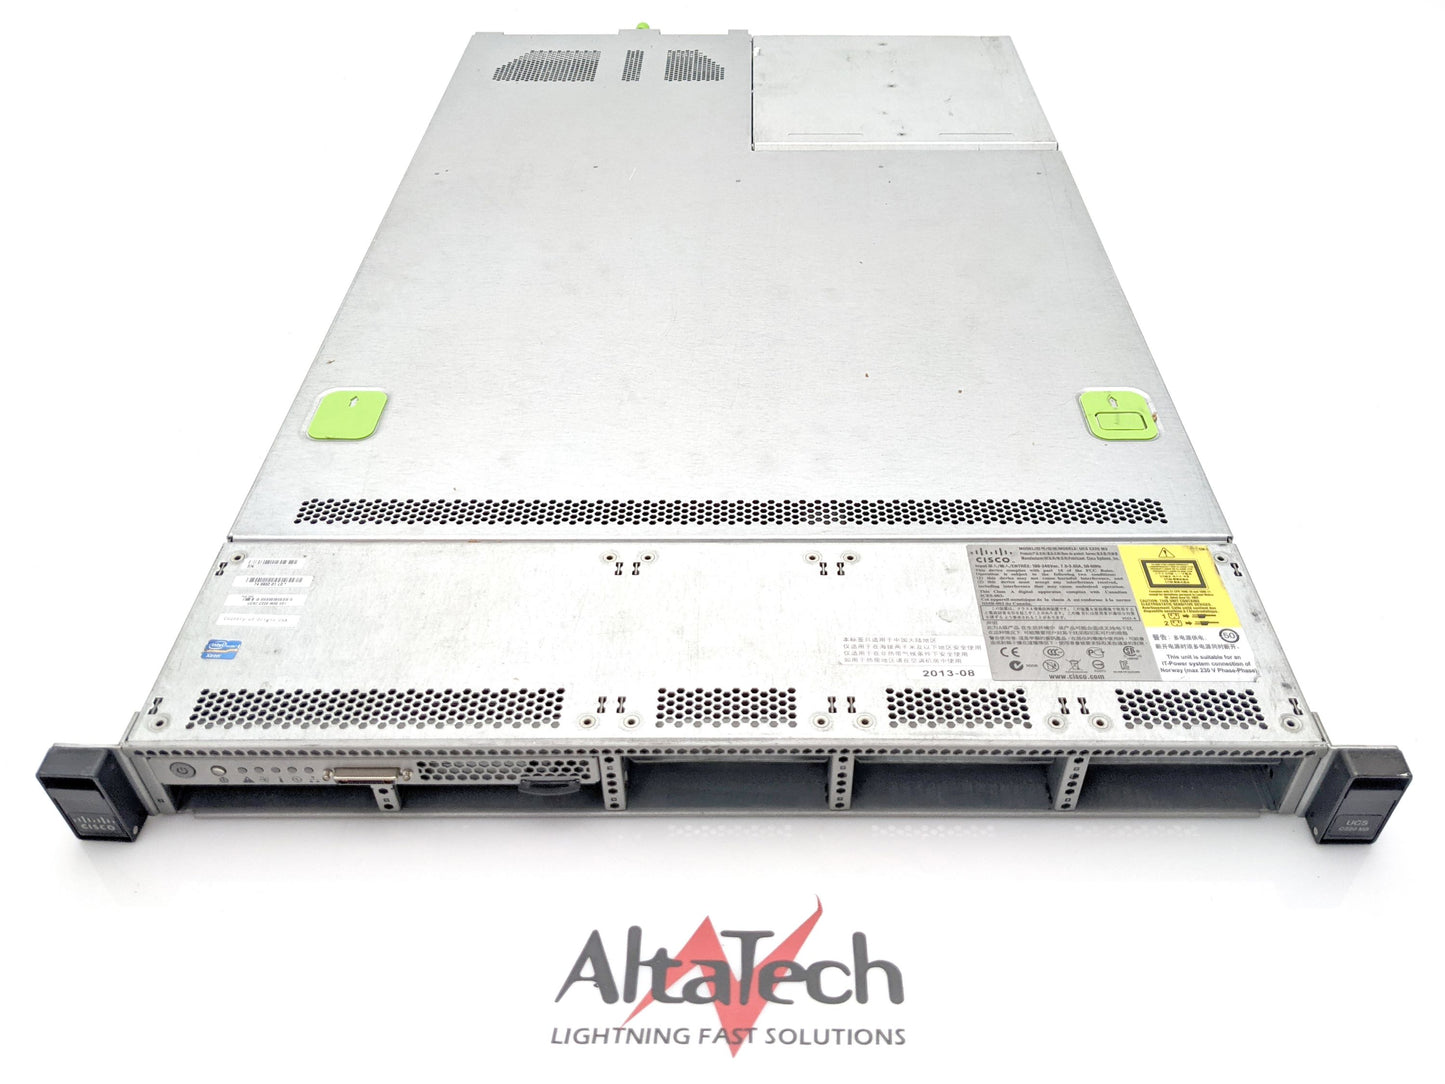 Cisco UCSC-C220-M3S UCS C220 M3SBE CTO Server Chassis, Used